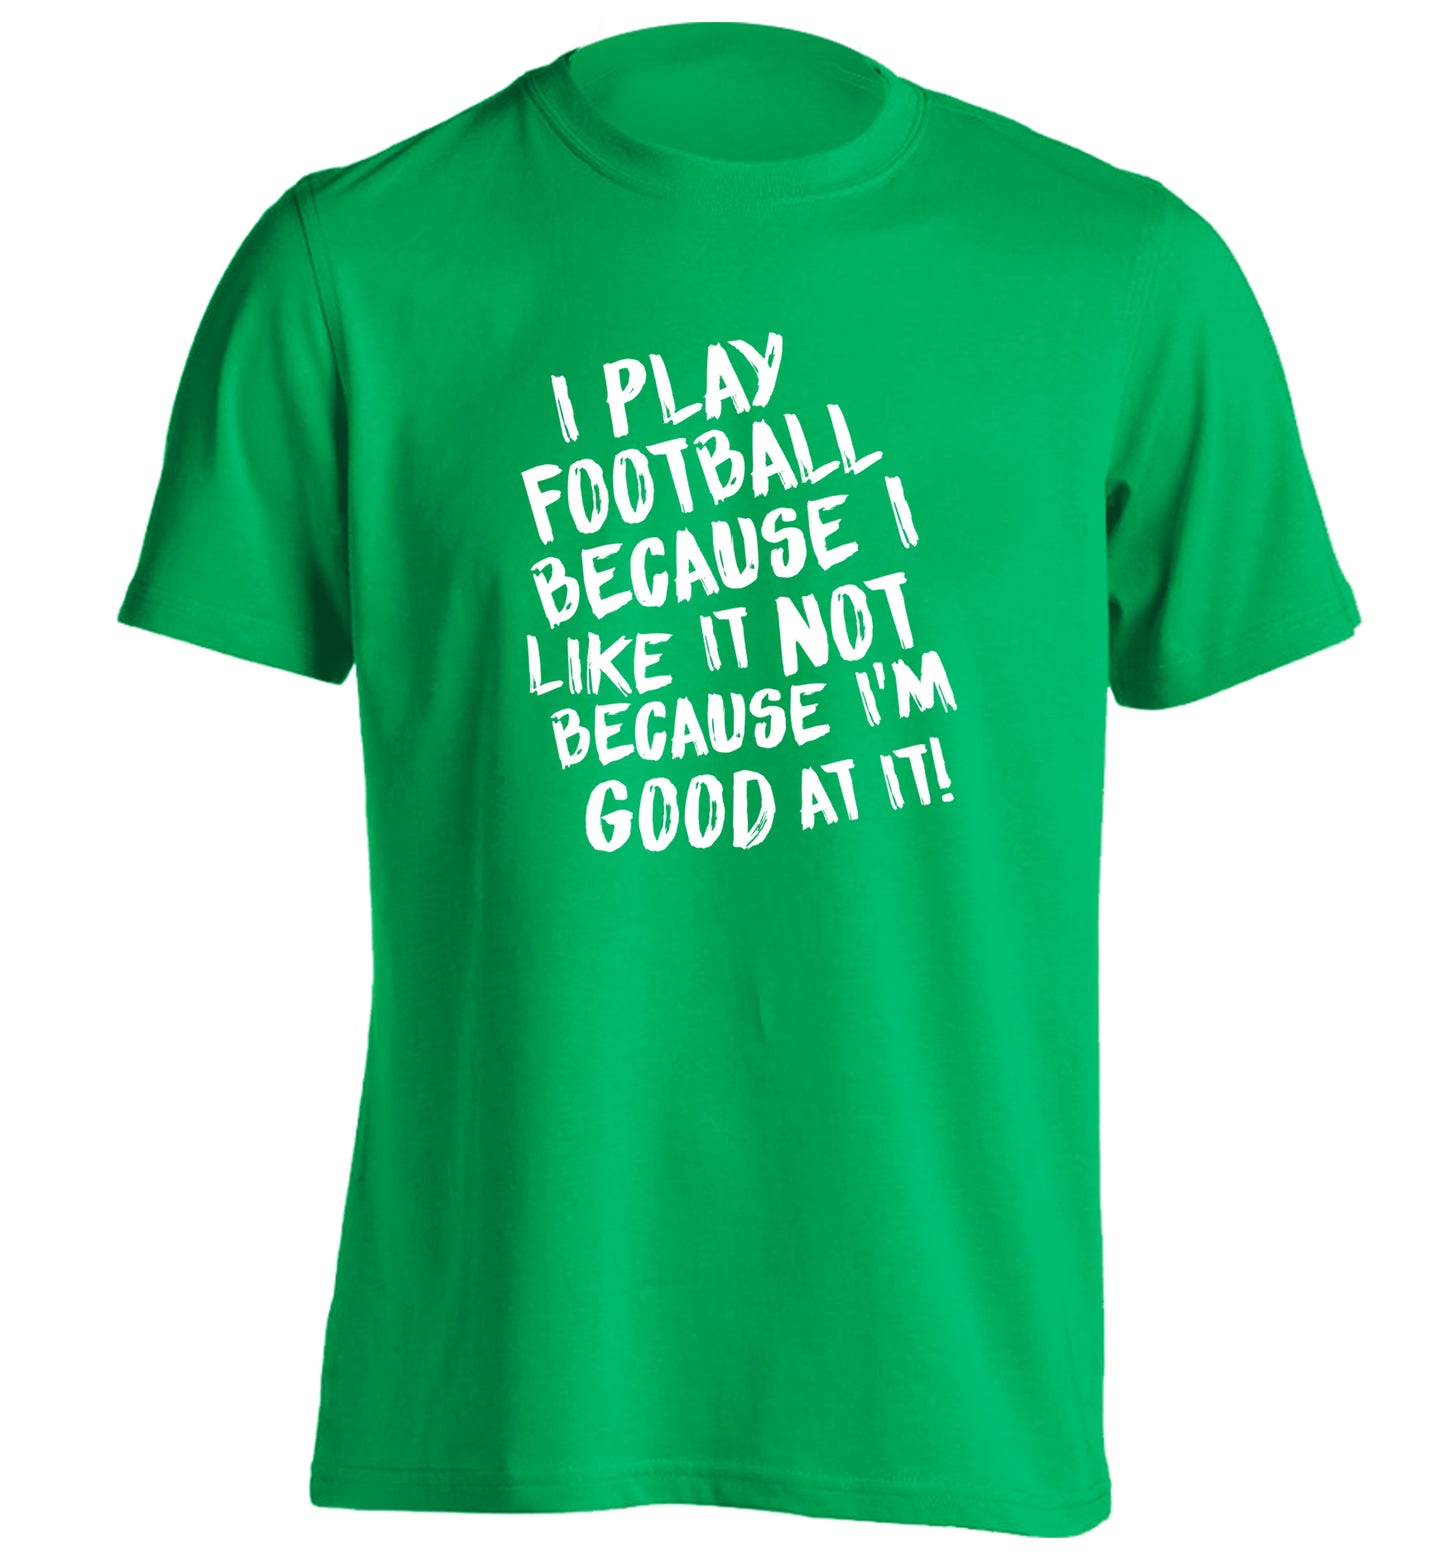 I play football because I like it not because I'm good at it adults unisexgreen Tshirt 2XL